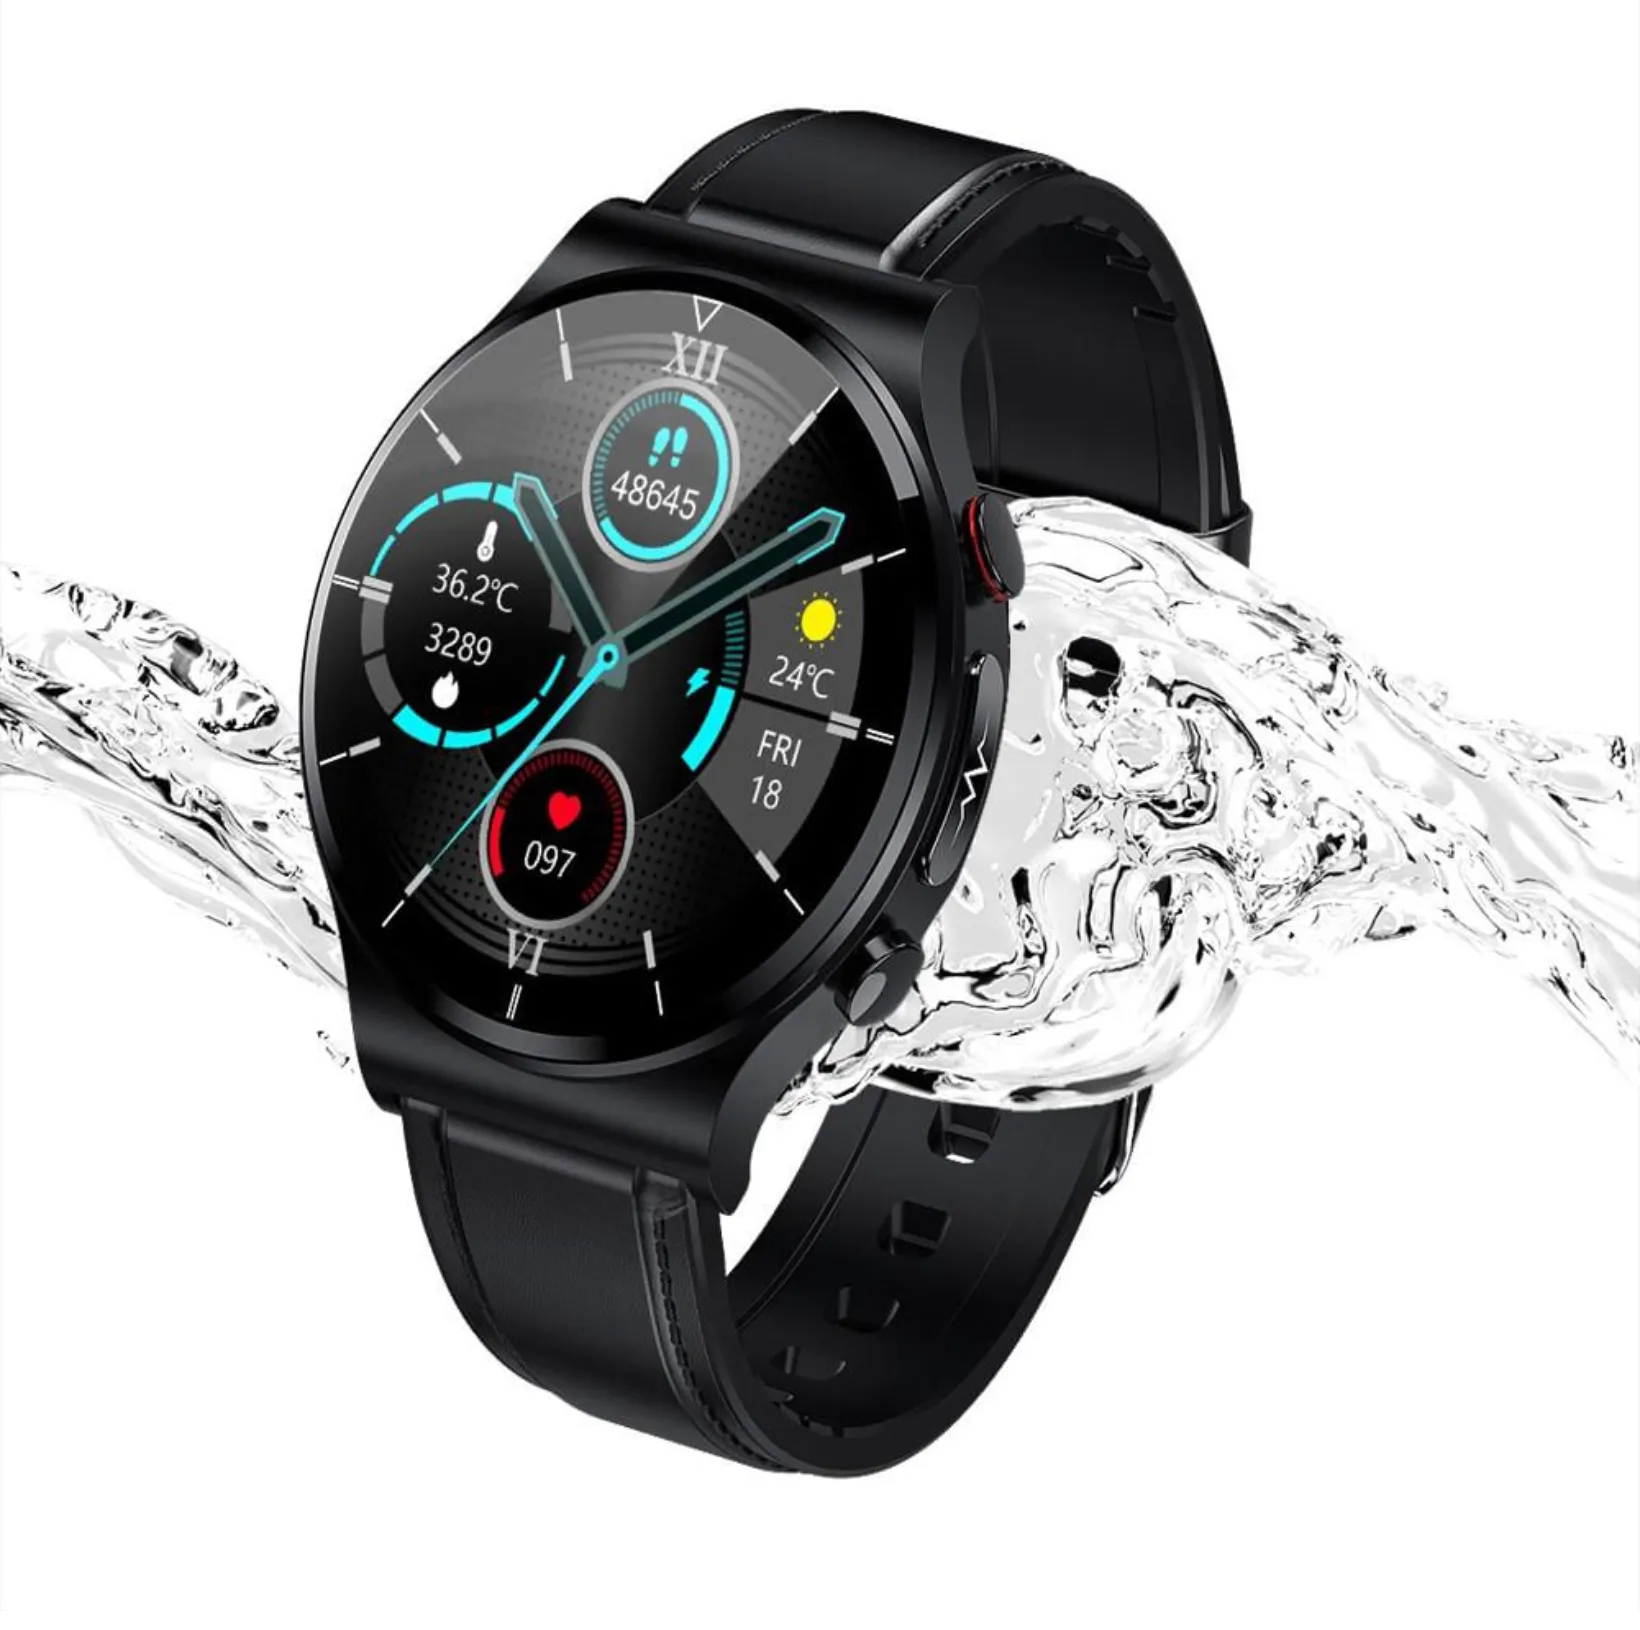 Reloj Smartwatch Inteligente SK18 Mobulaa I Original Mobulaa IP67